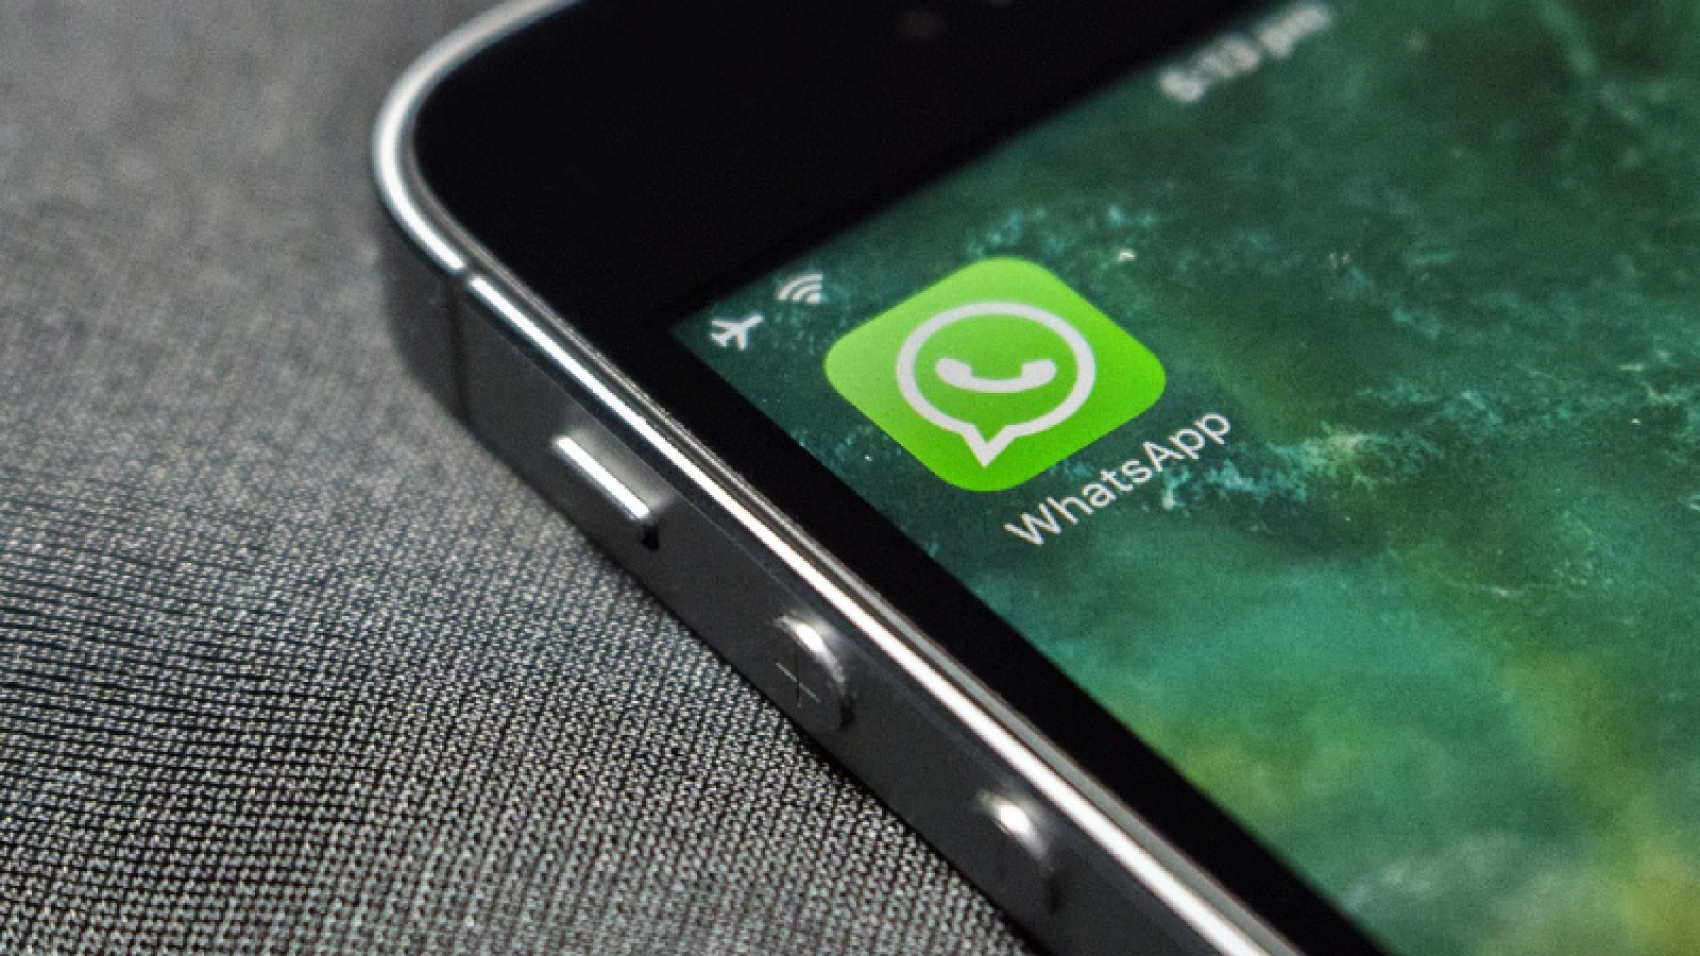 C 1 ноября WhatsApp прекратит поддержку старых версий iOS и Android